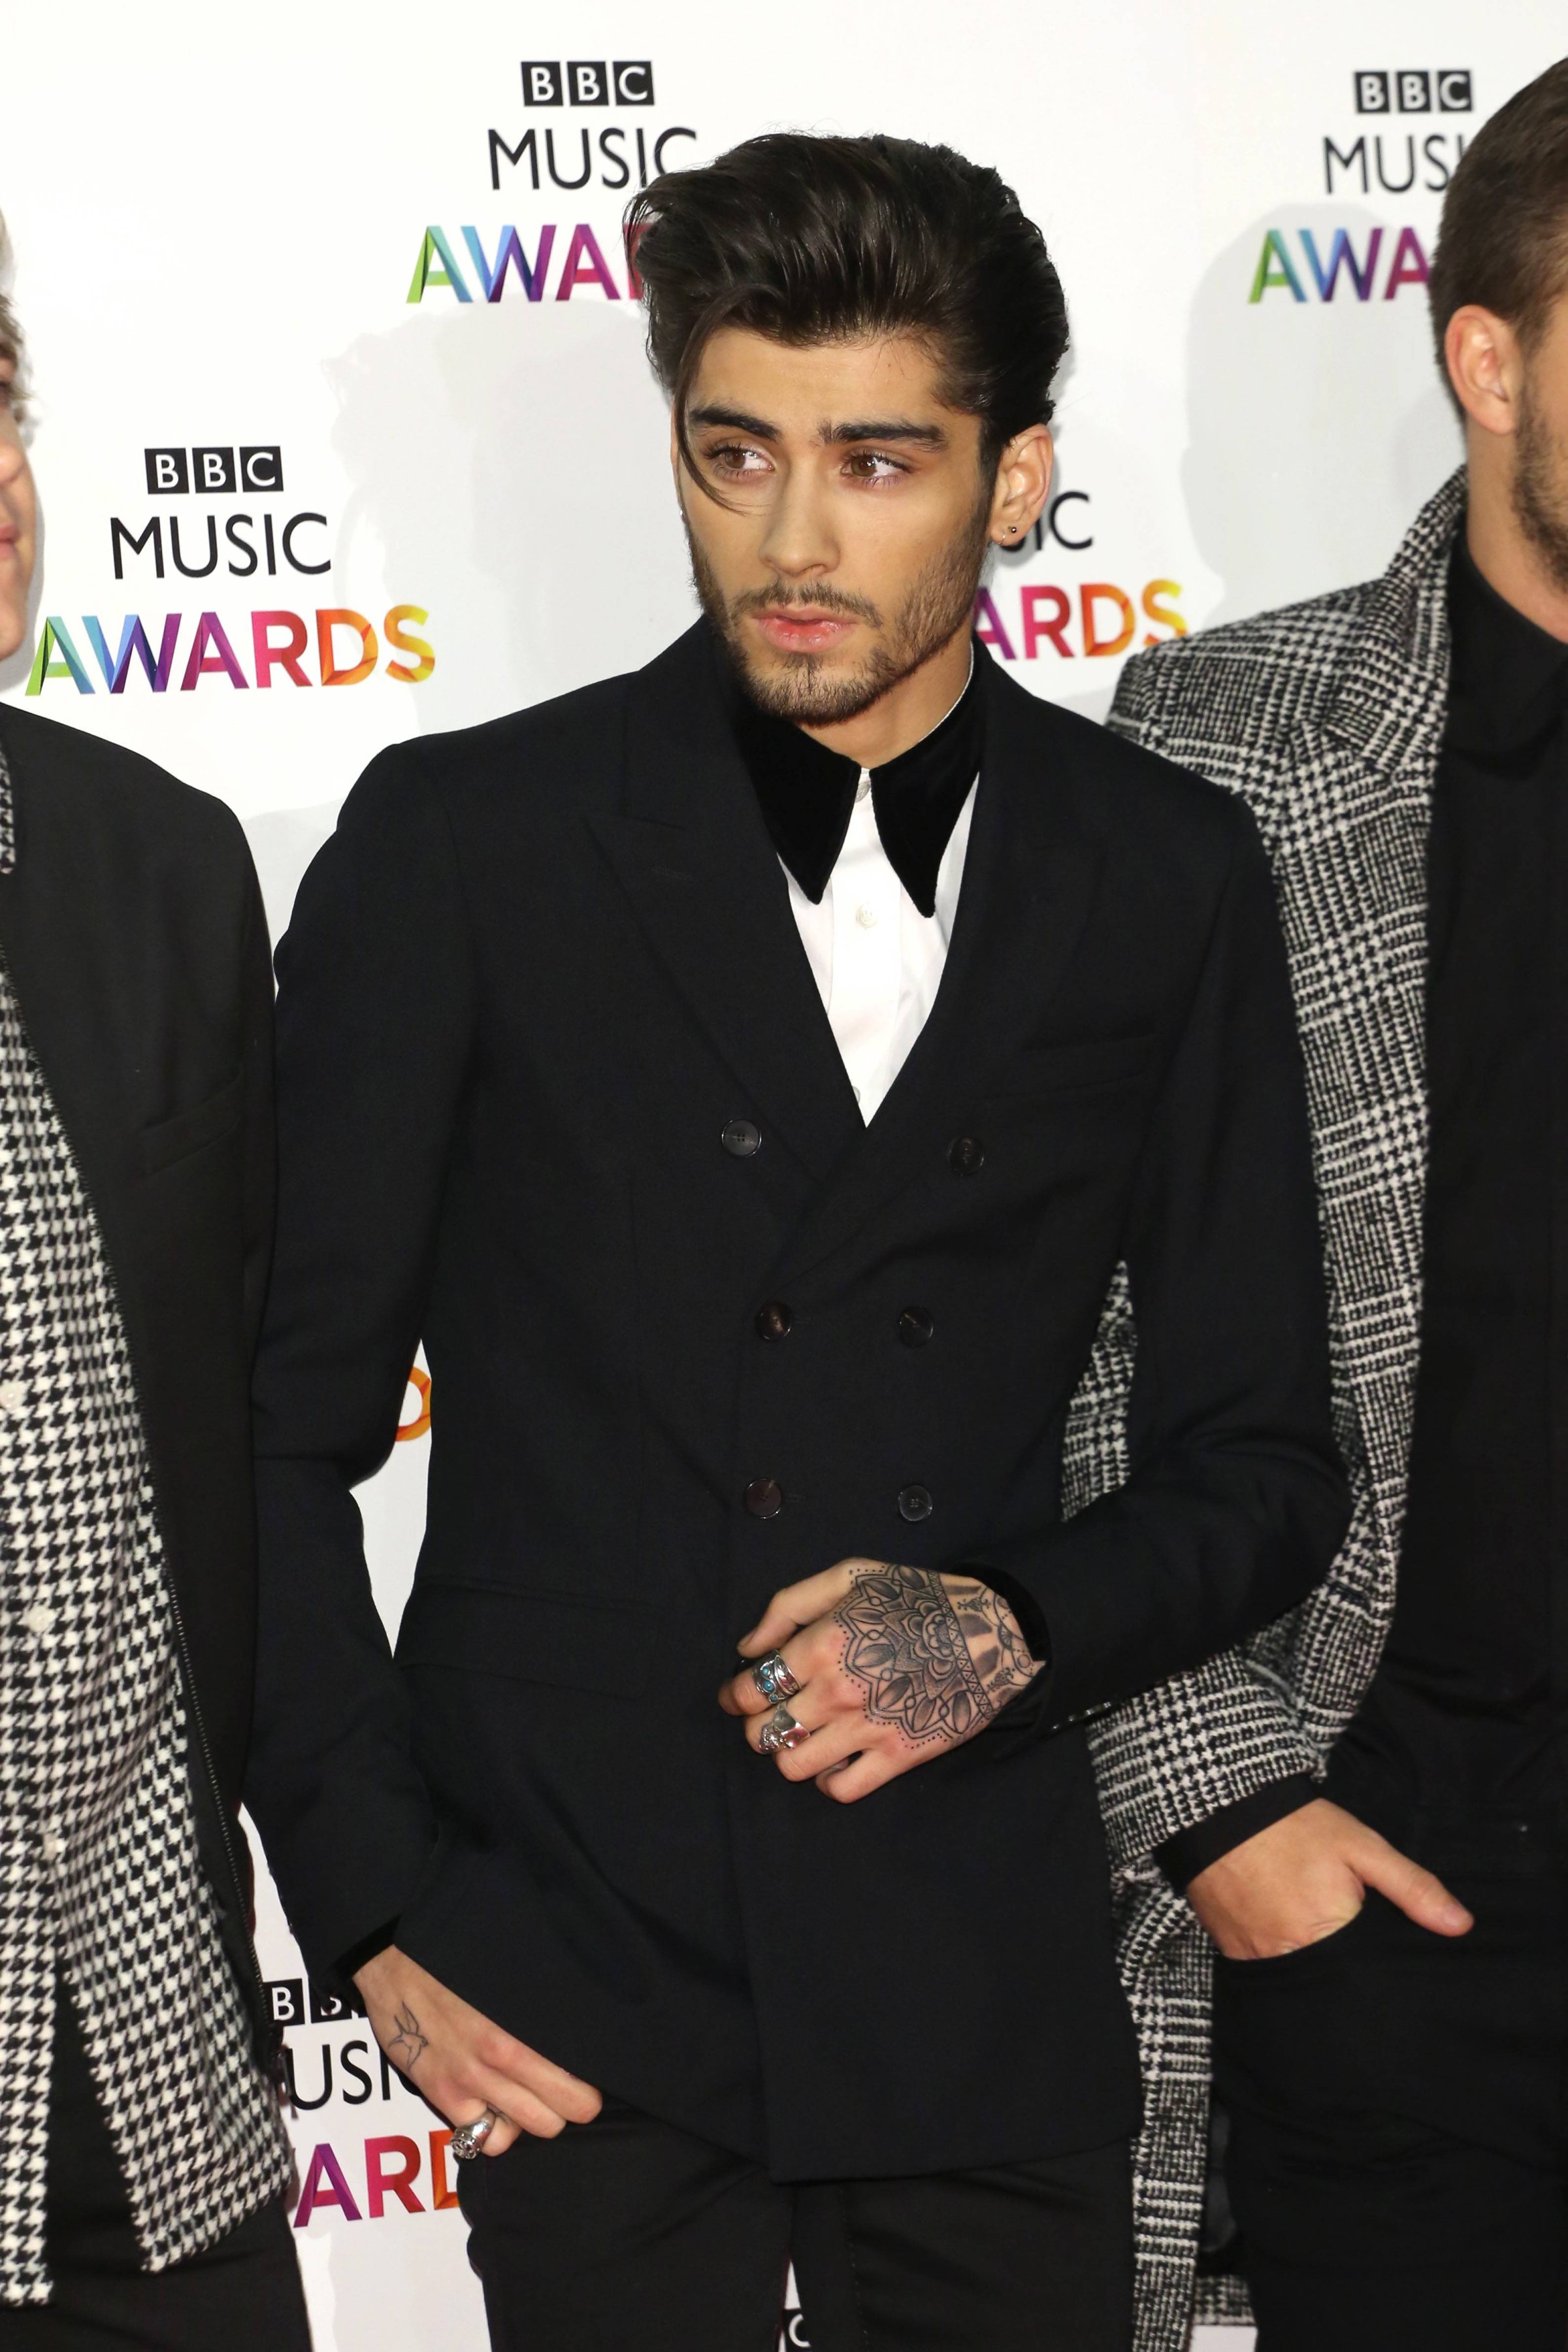 Zayn Malik at the BBC Music Awards 2014 in London, England on Dec. 12, 2014.